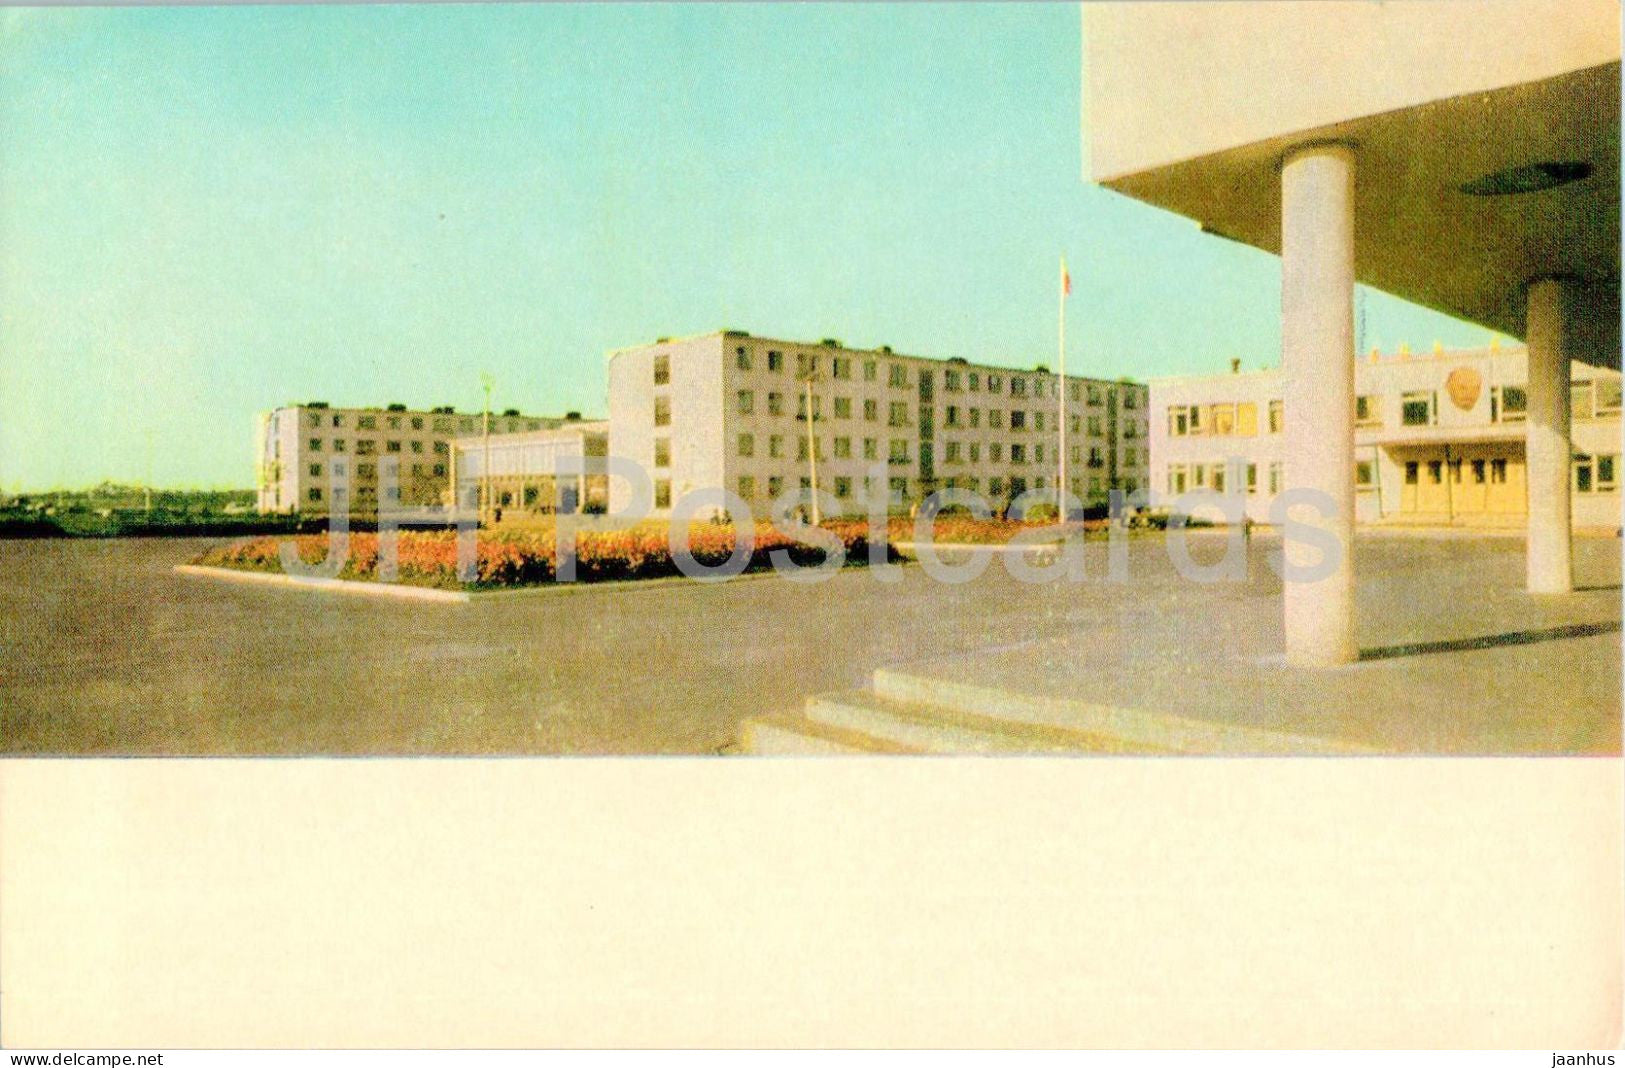 Podmoskovye - State Farm - Sokvoz - Dawn of Communism - Moscow region - 1968 - Russia USSR - unused - JH Postcards